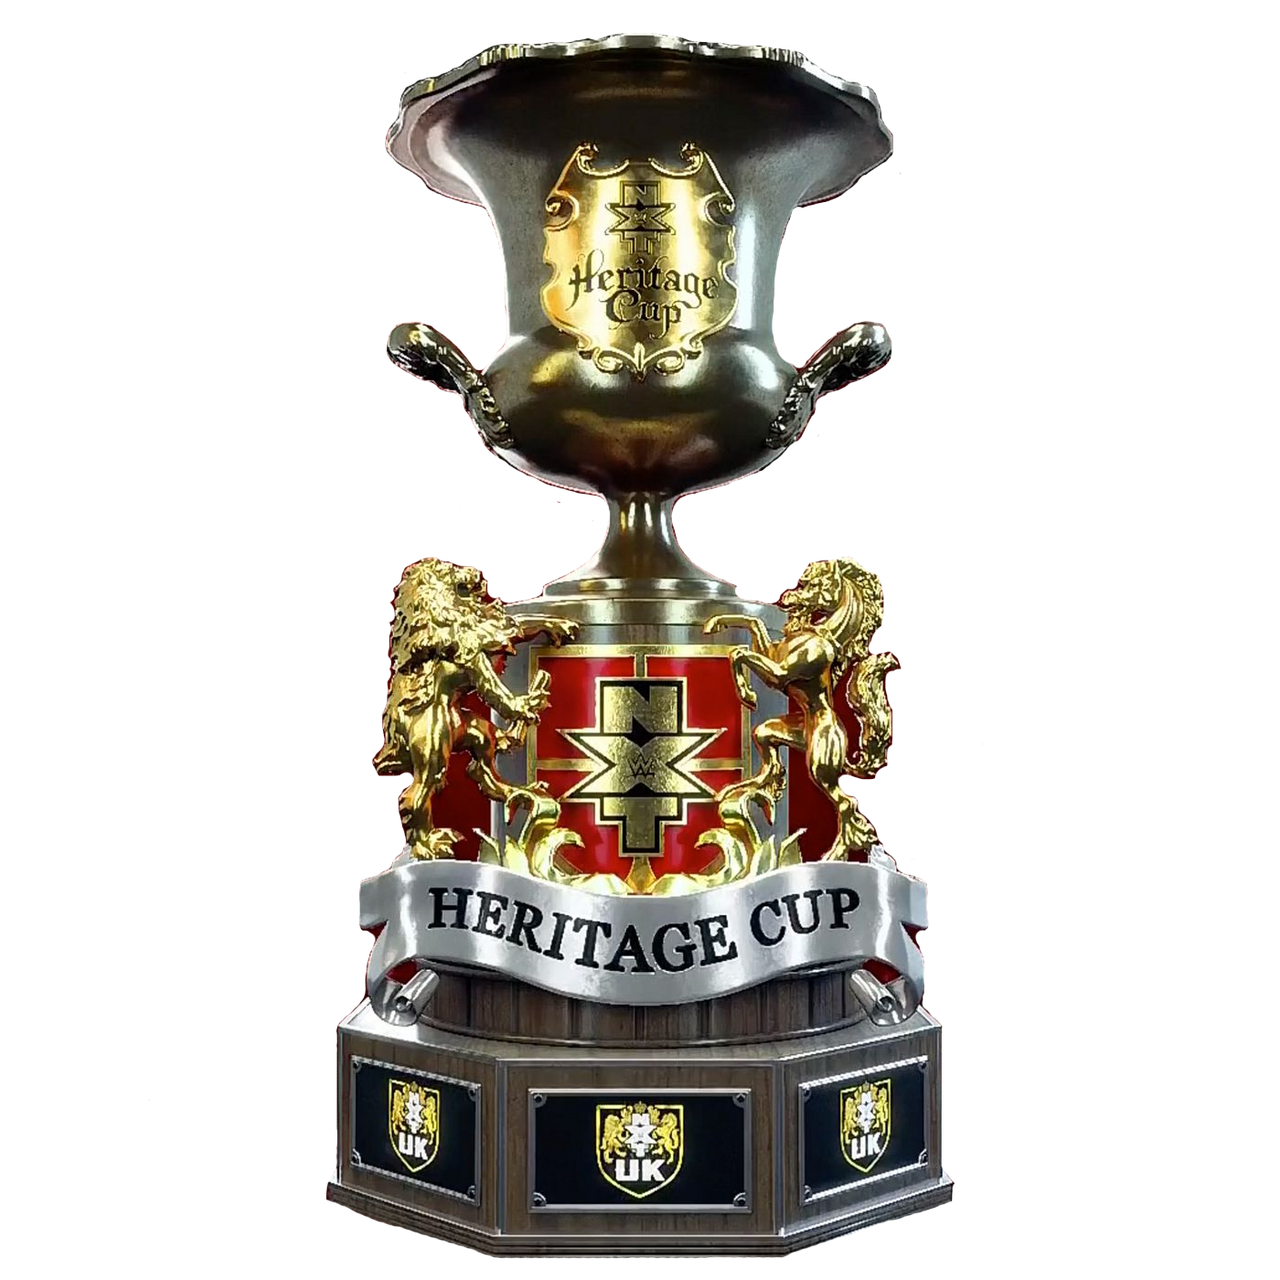 NXT UK Heritage Cup Render by PODWINSKI on DeviantArt